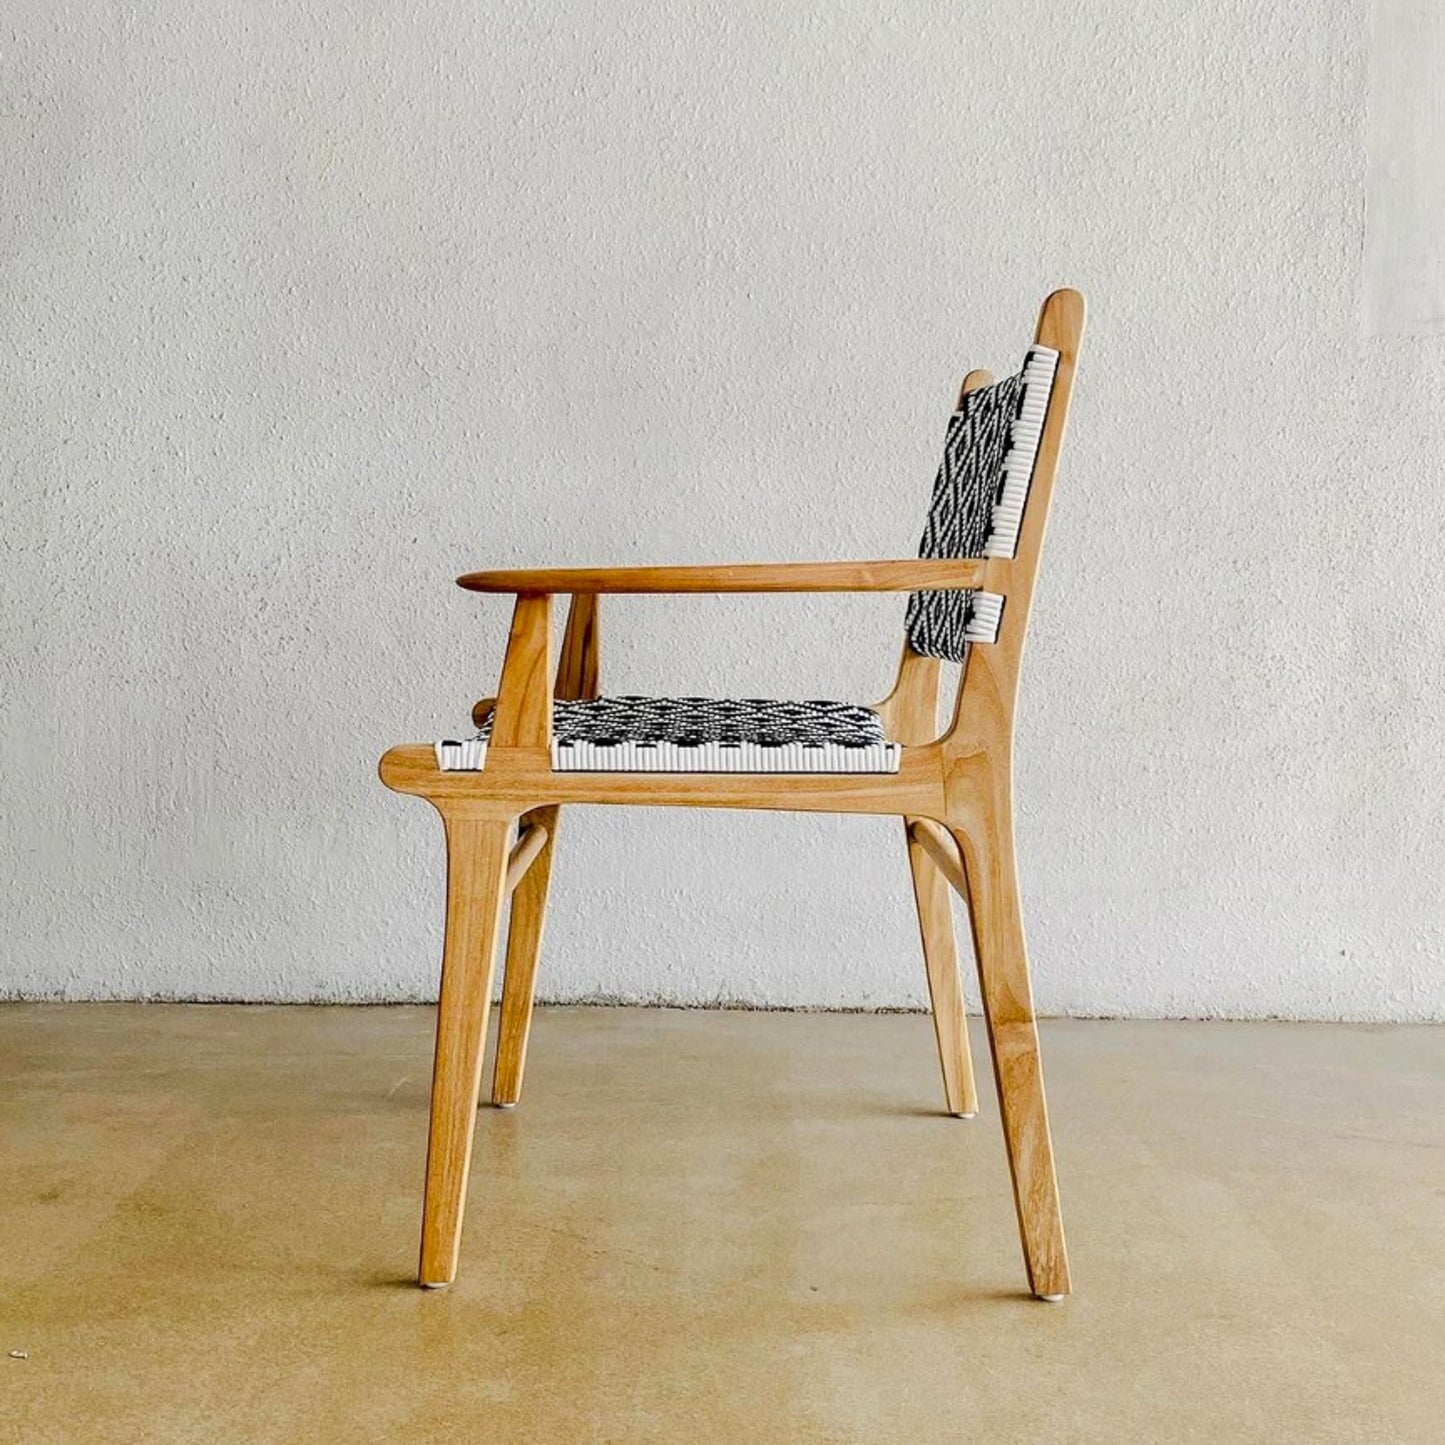 Hand woven Rattan chair